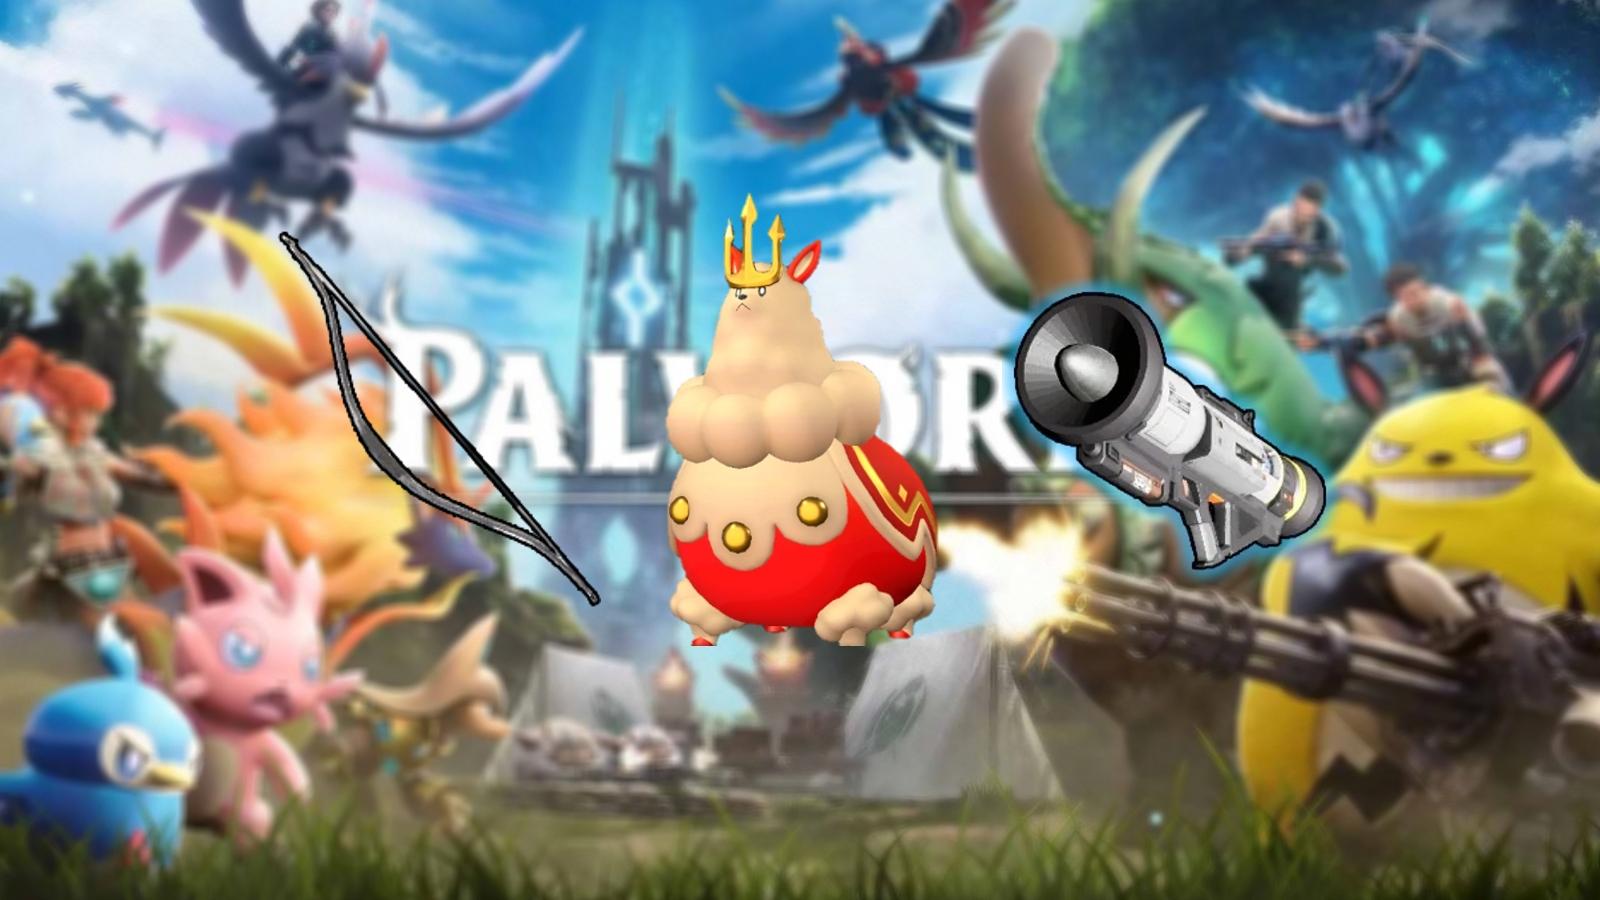 Palworld Legendary Weapons Boss Pal